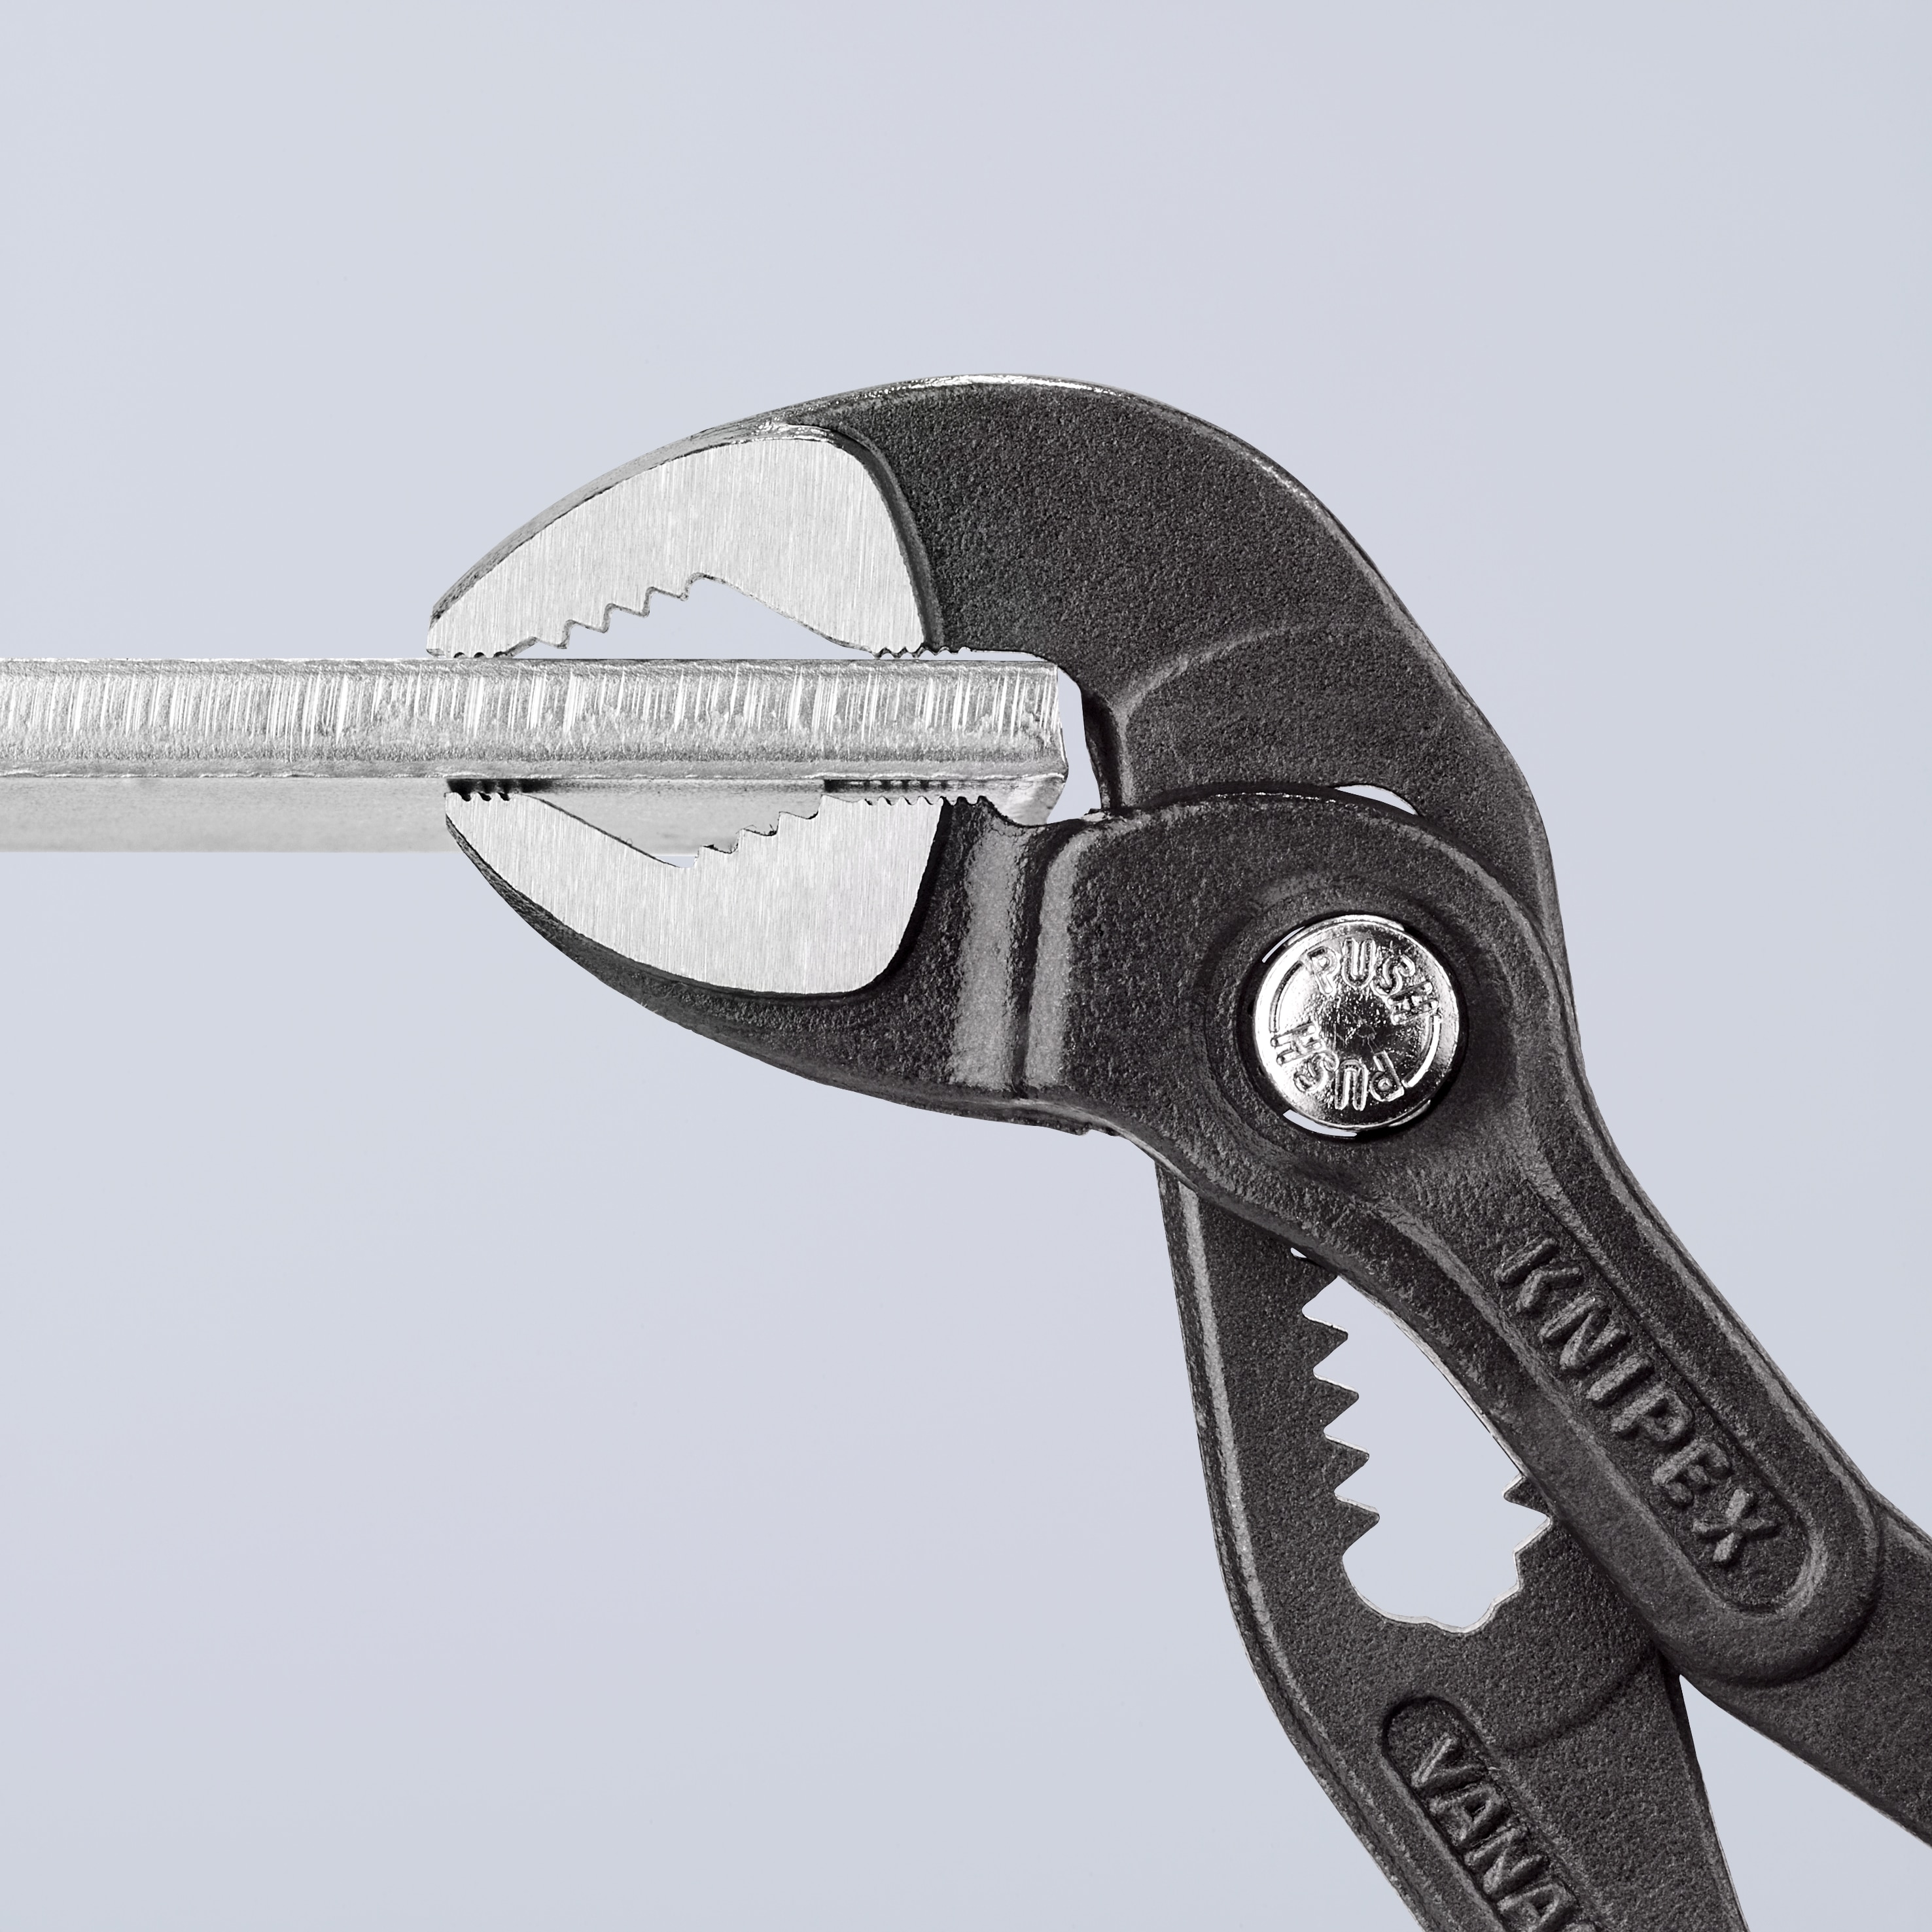 Tools that bite! Meet the KNIPEX Cobra® range